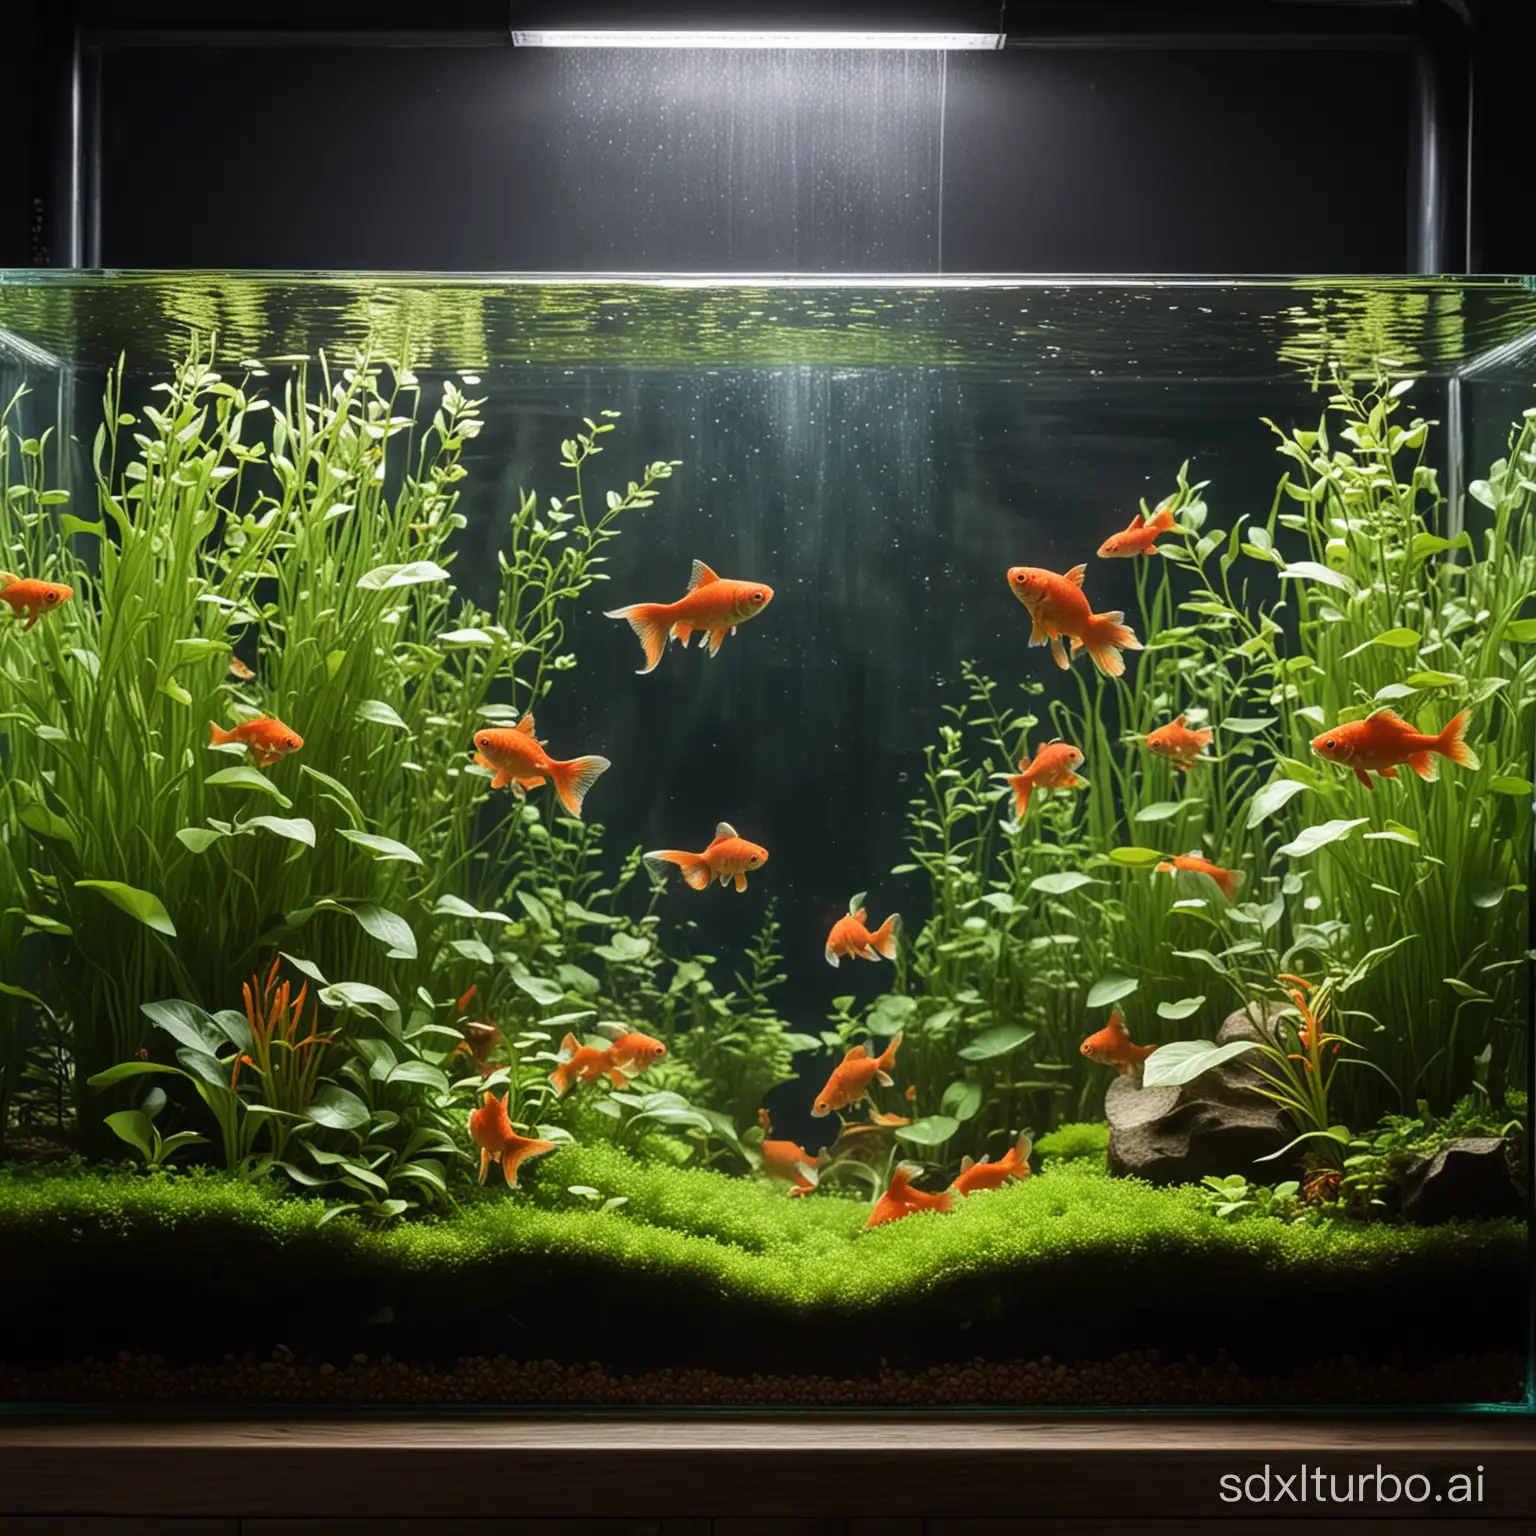 Vibrant-Underwater-Scene-Red-Goldfish-Among-Mossy-Water-Plants